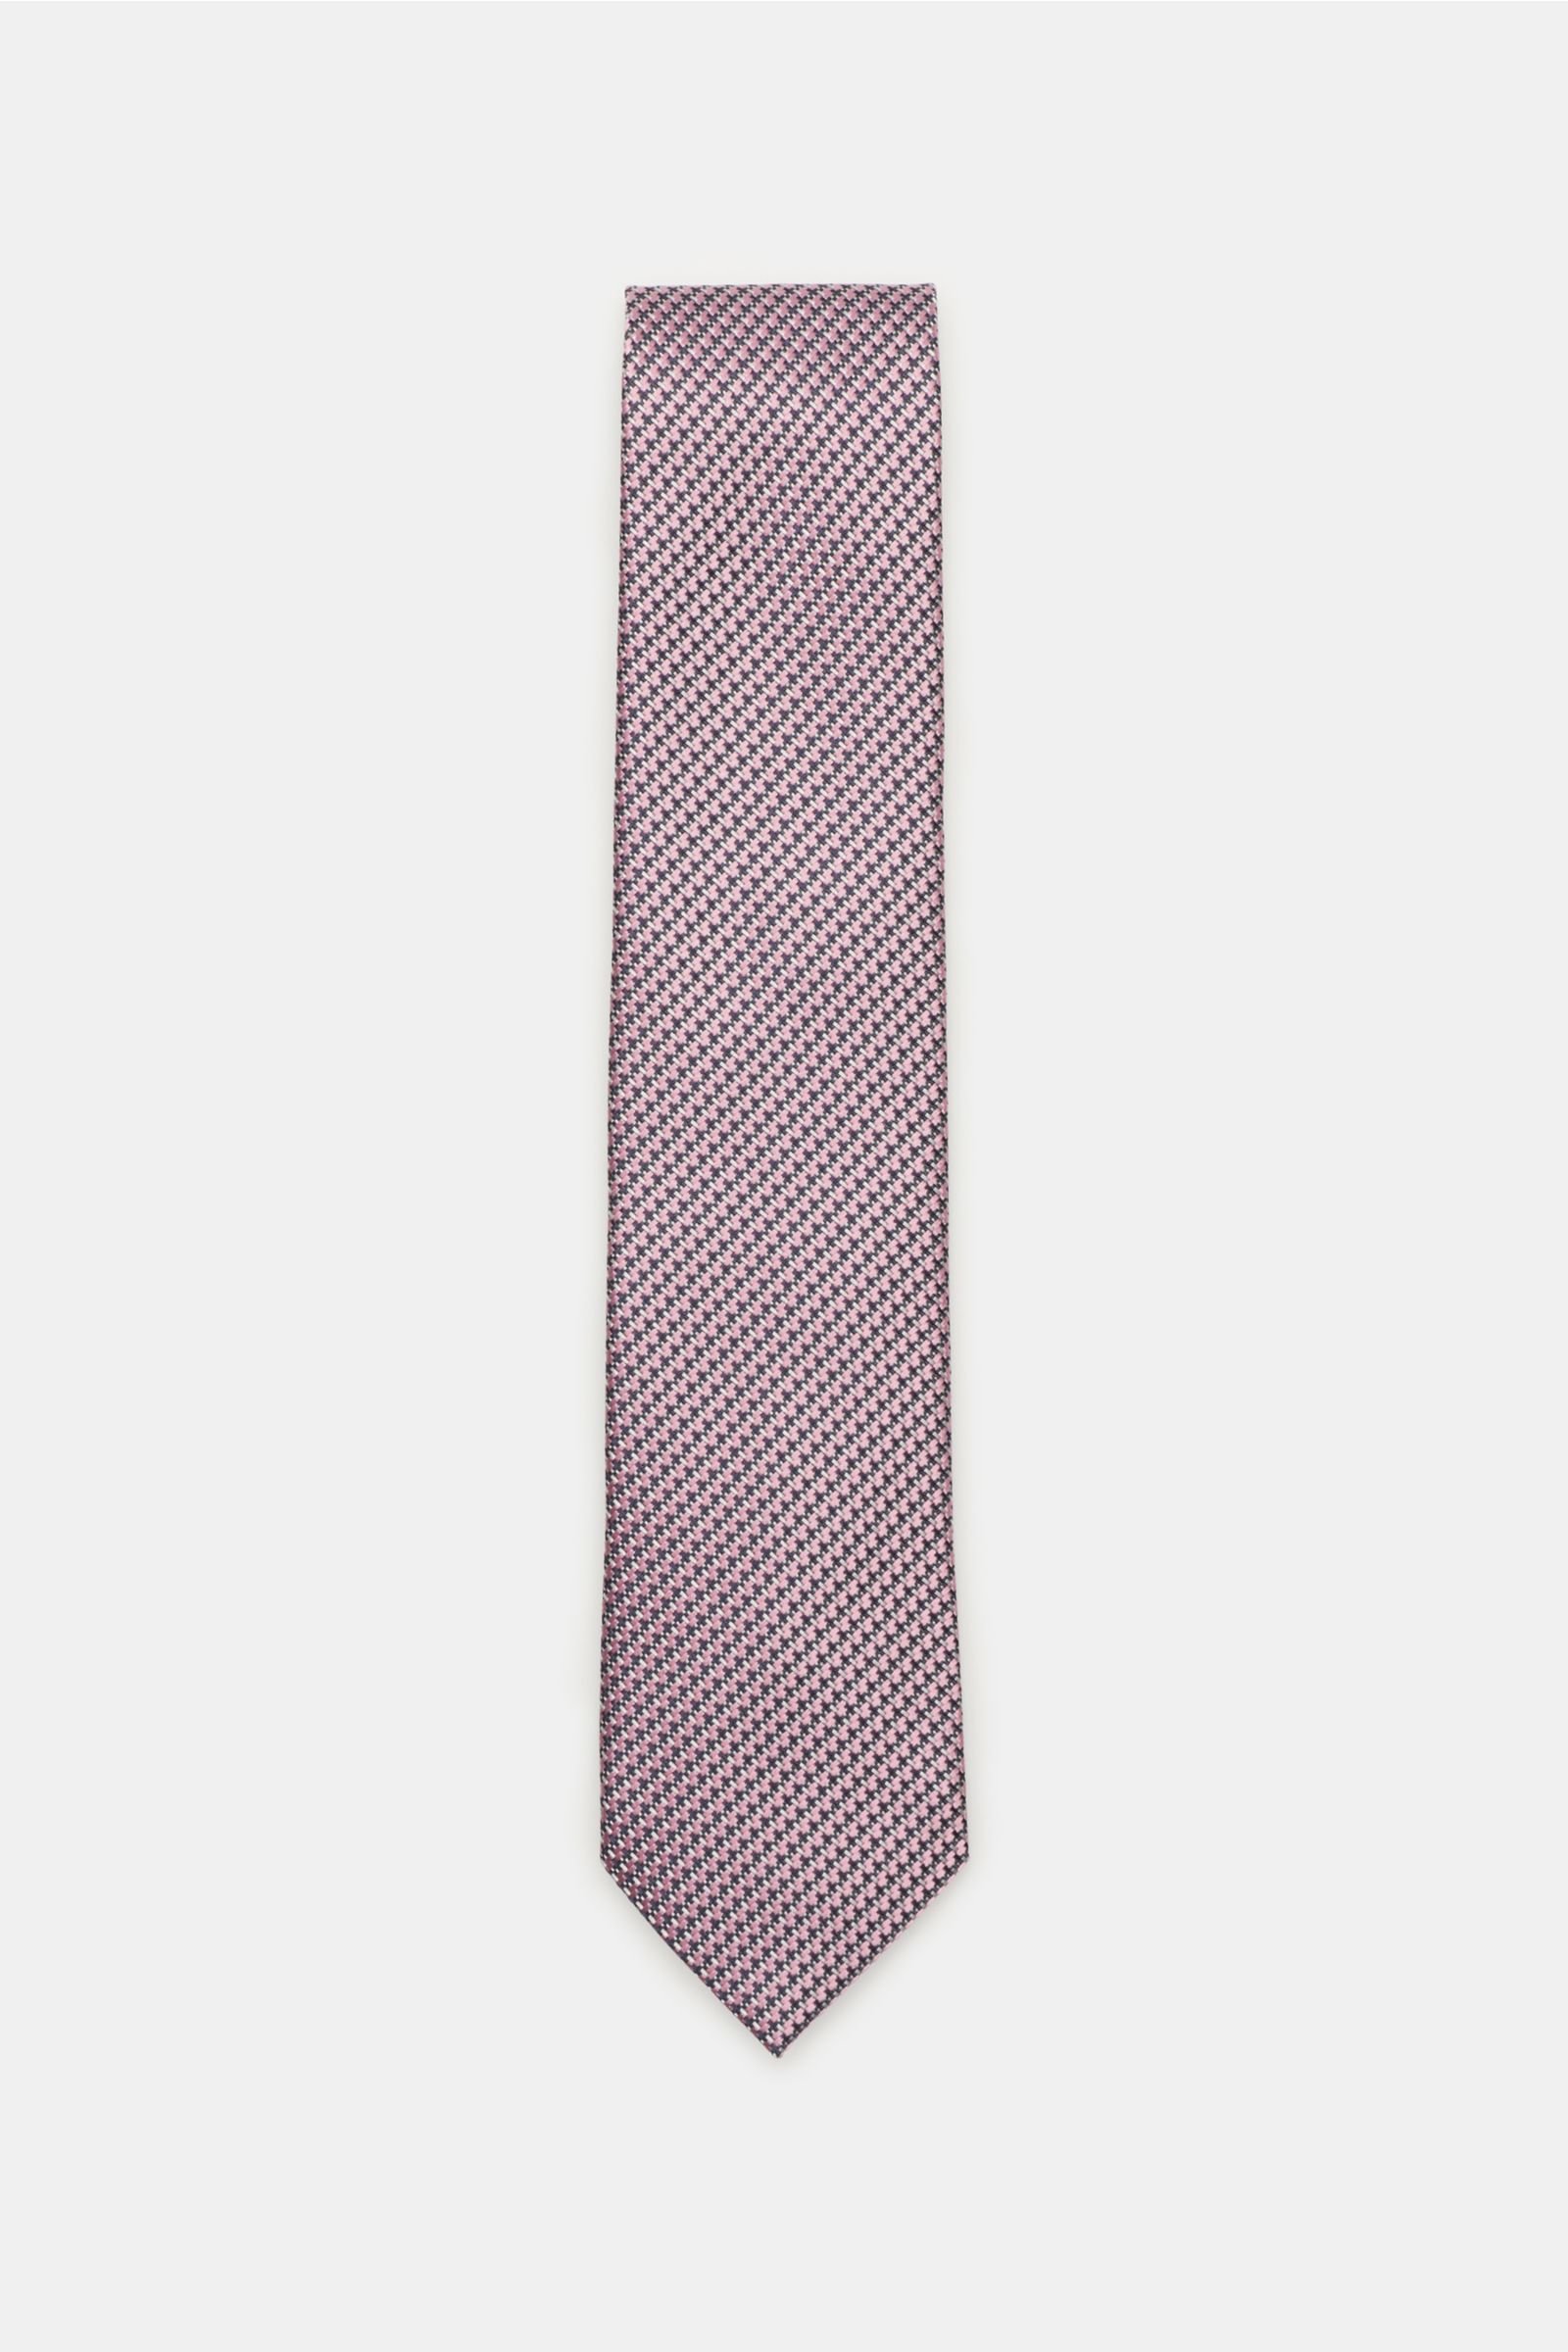 Silk tie antique pink patterned